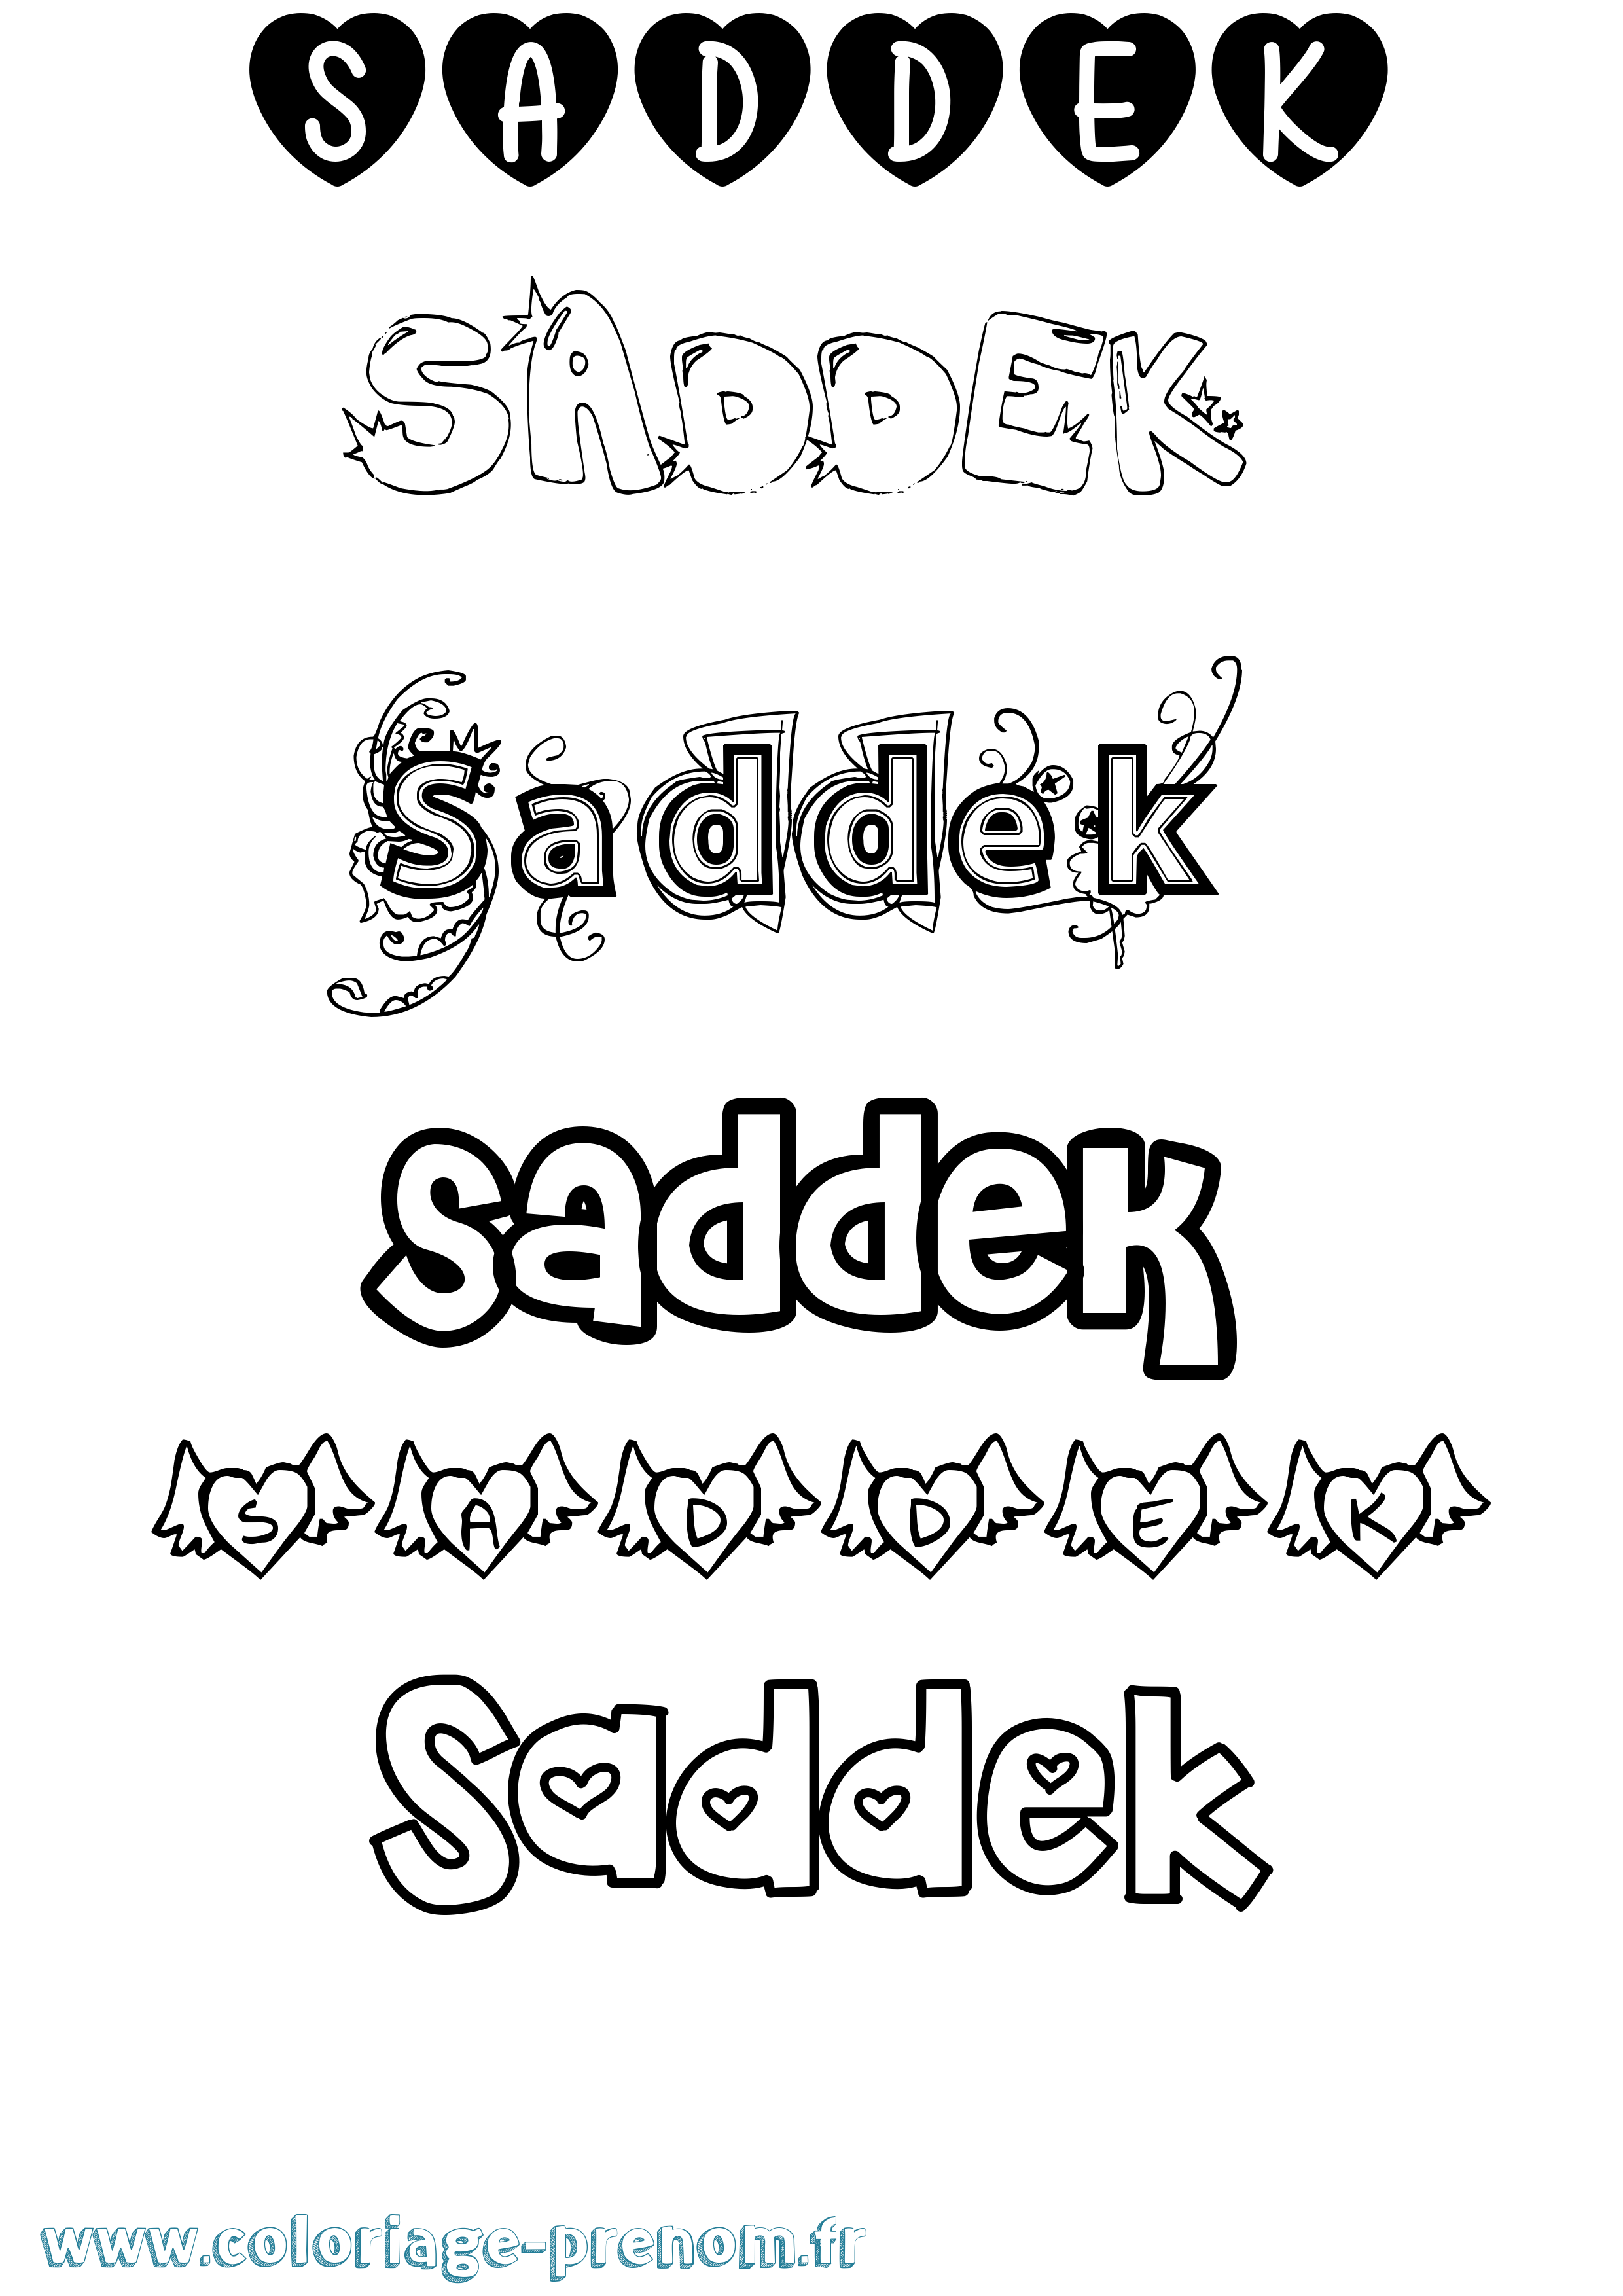 Coloriage prénom Saddek Girly